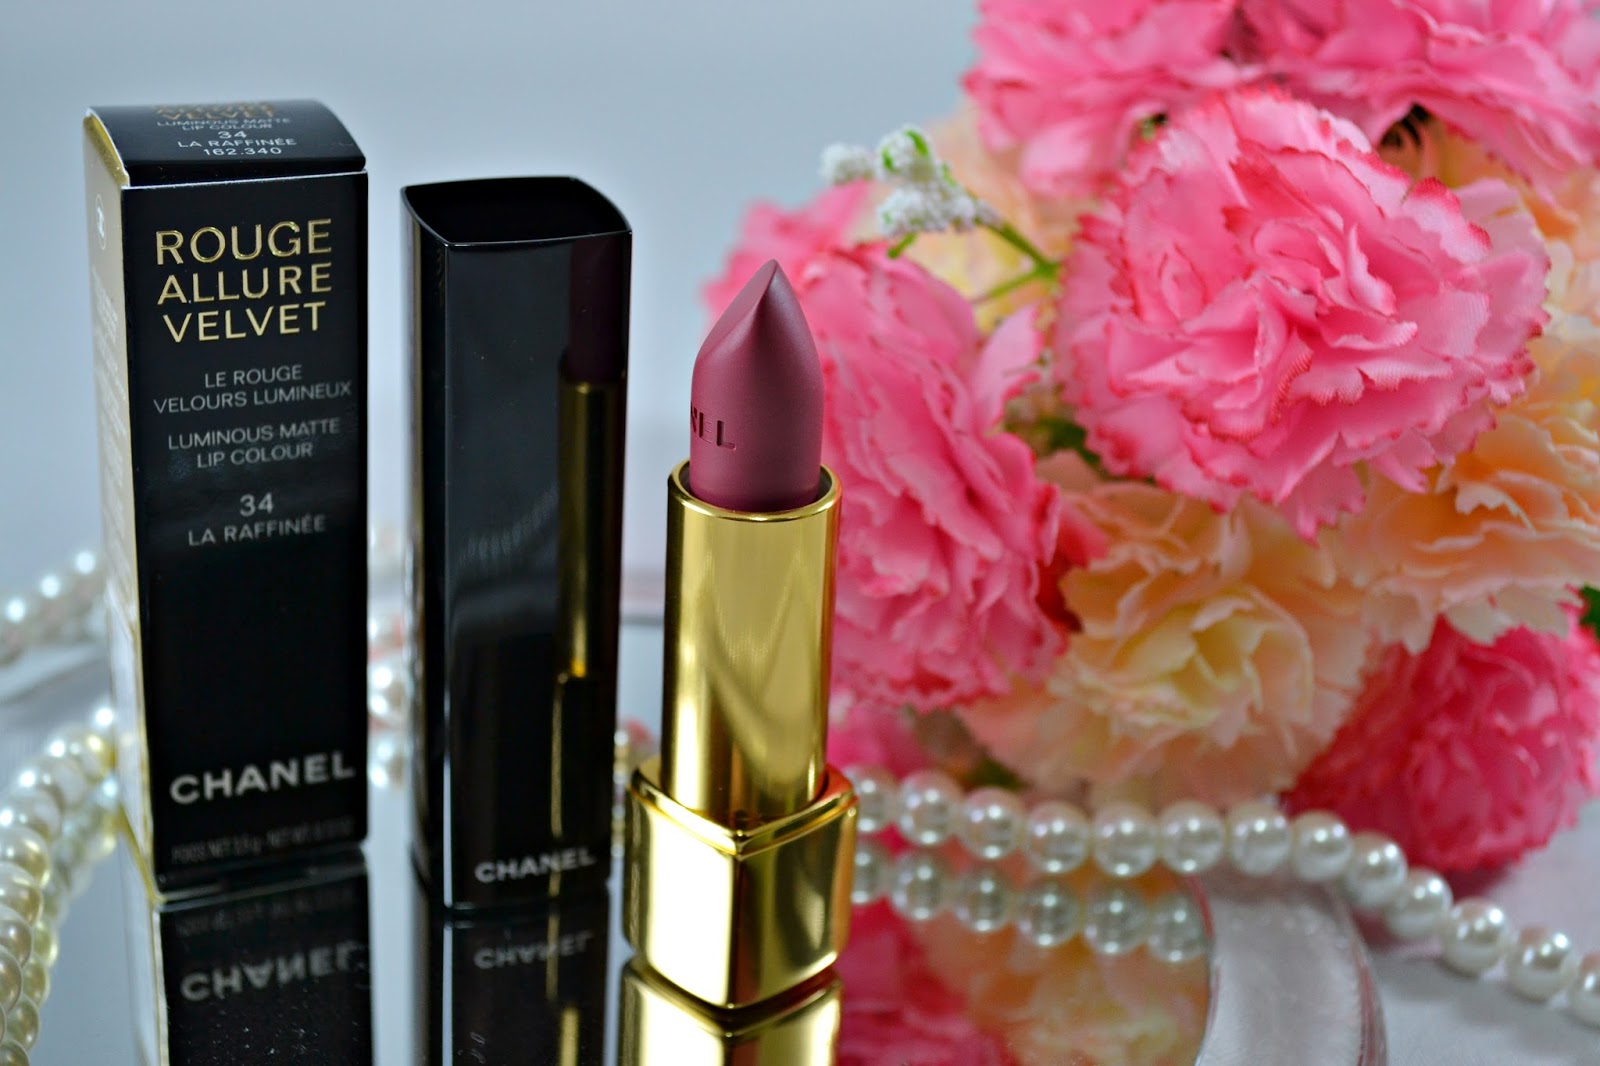 Chanel Rouge Allure Velvet: 34 La Raffinee | All About Beauty 101